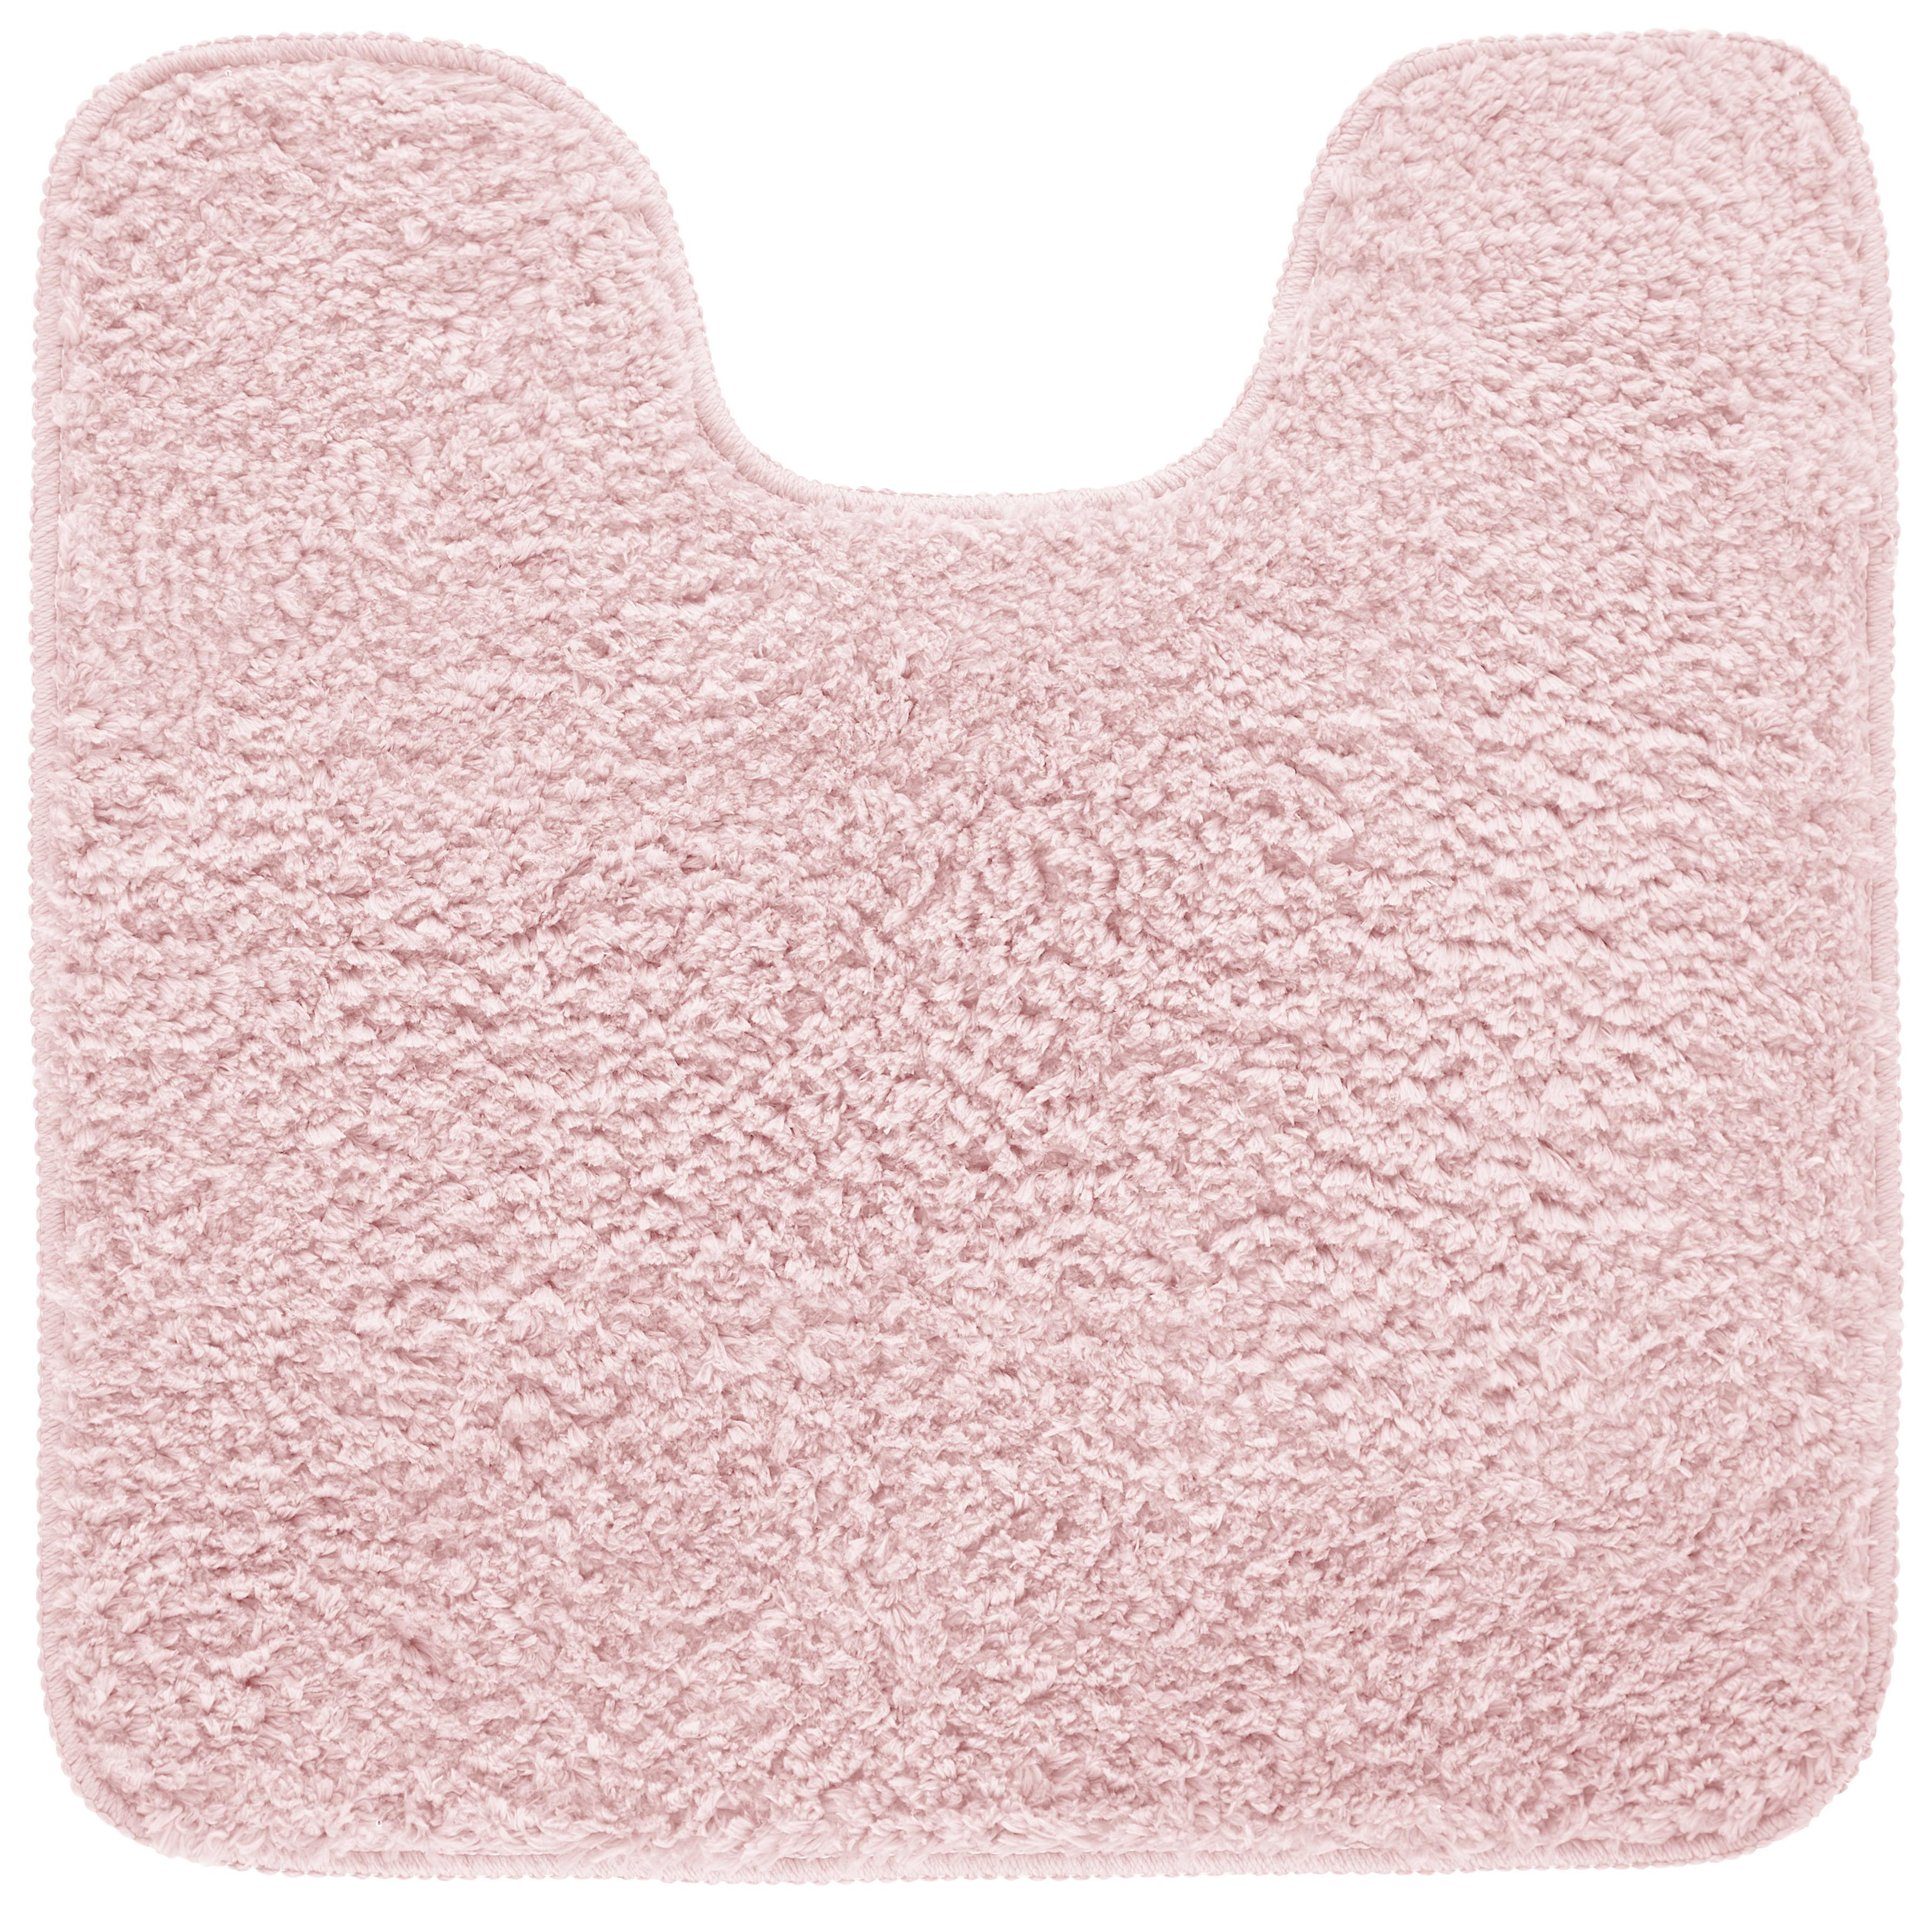 Wc-preproga Vivien - roza, tekstil (50/50cm) - Premium Living